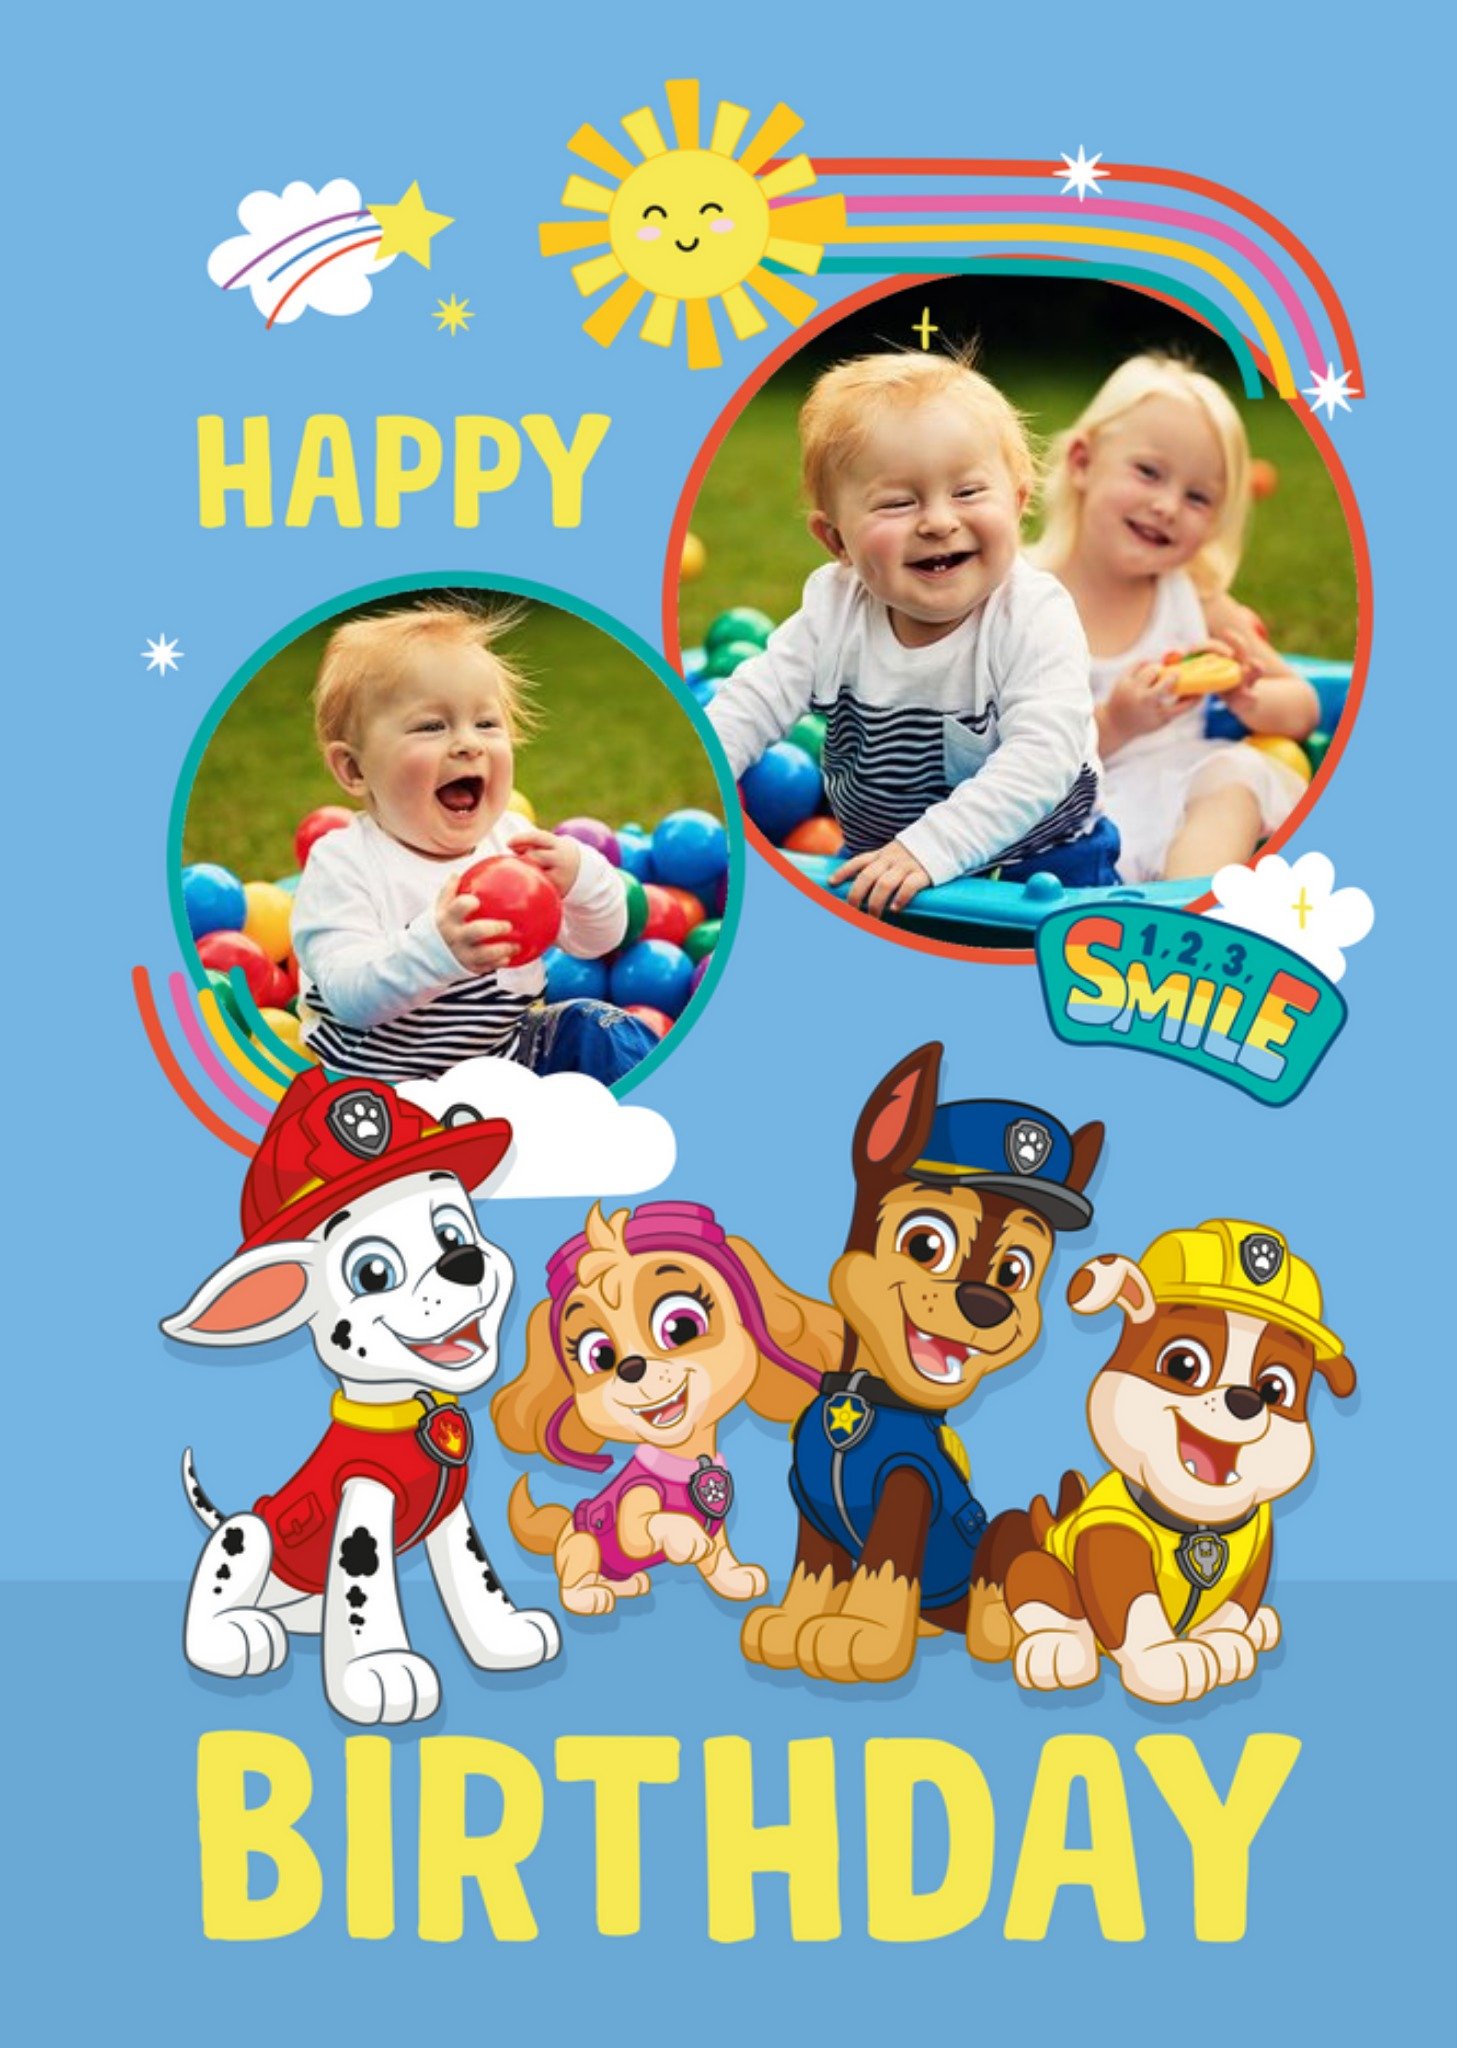 Nickelodeon Paw Patrol Characters Photo Upload Birthday Card, Large